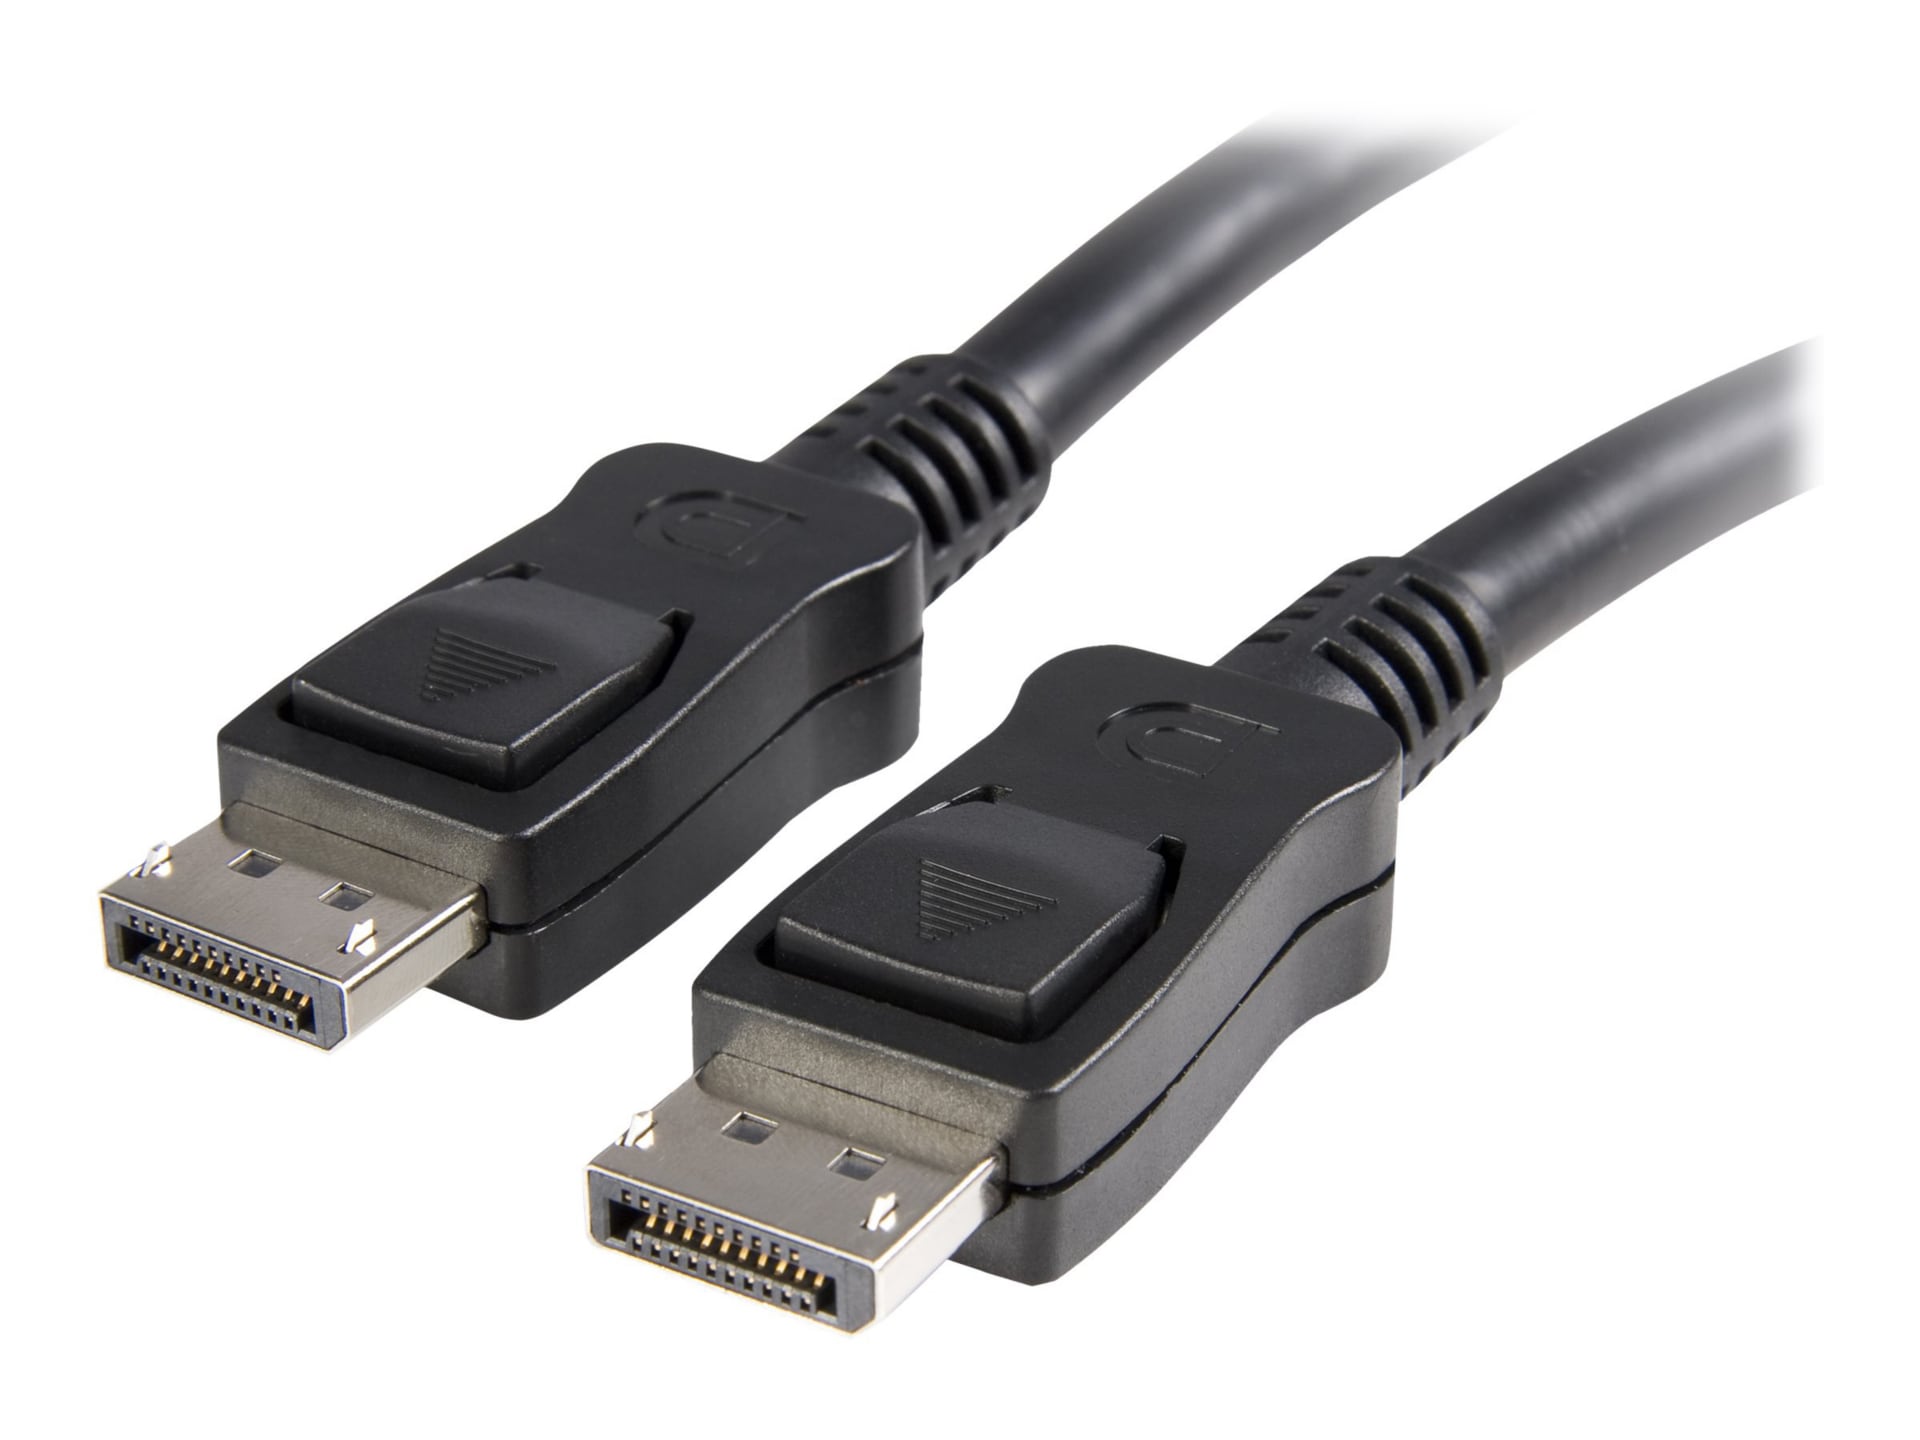 StarTech.com 25ft DisplayPort Cable w/Latches, DP 2560 x 1440p 30Hz